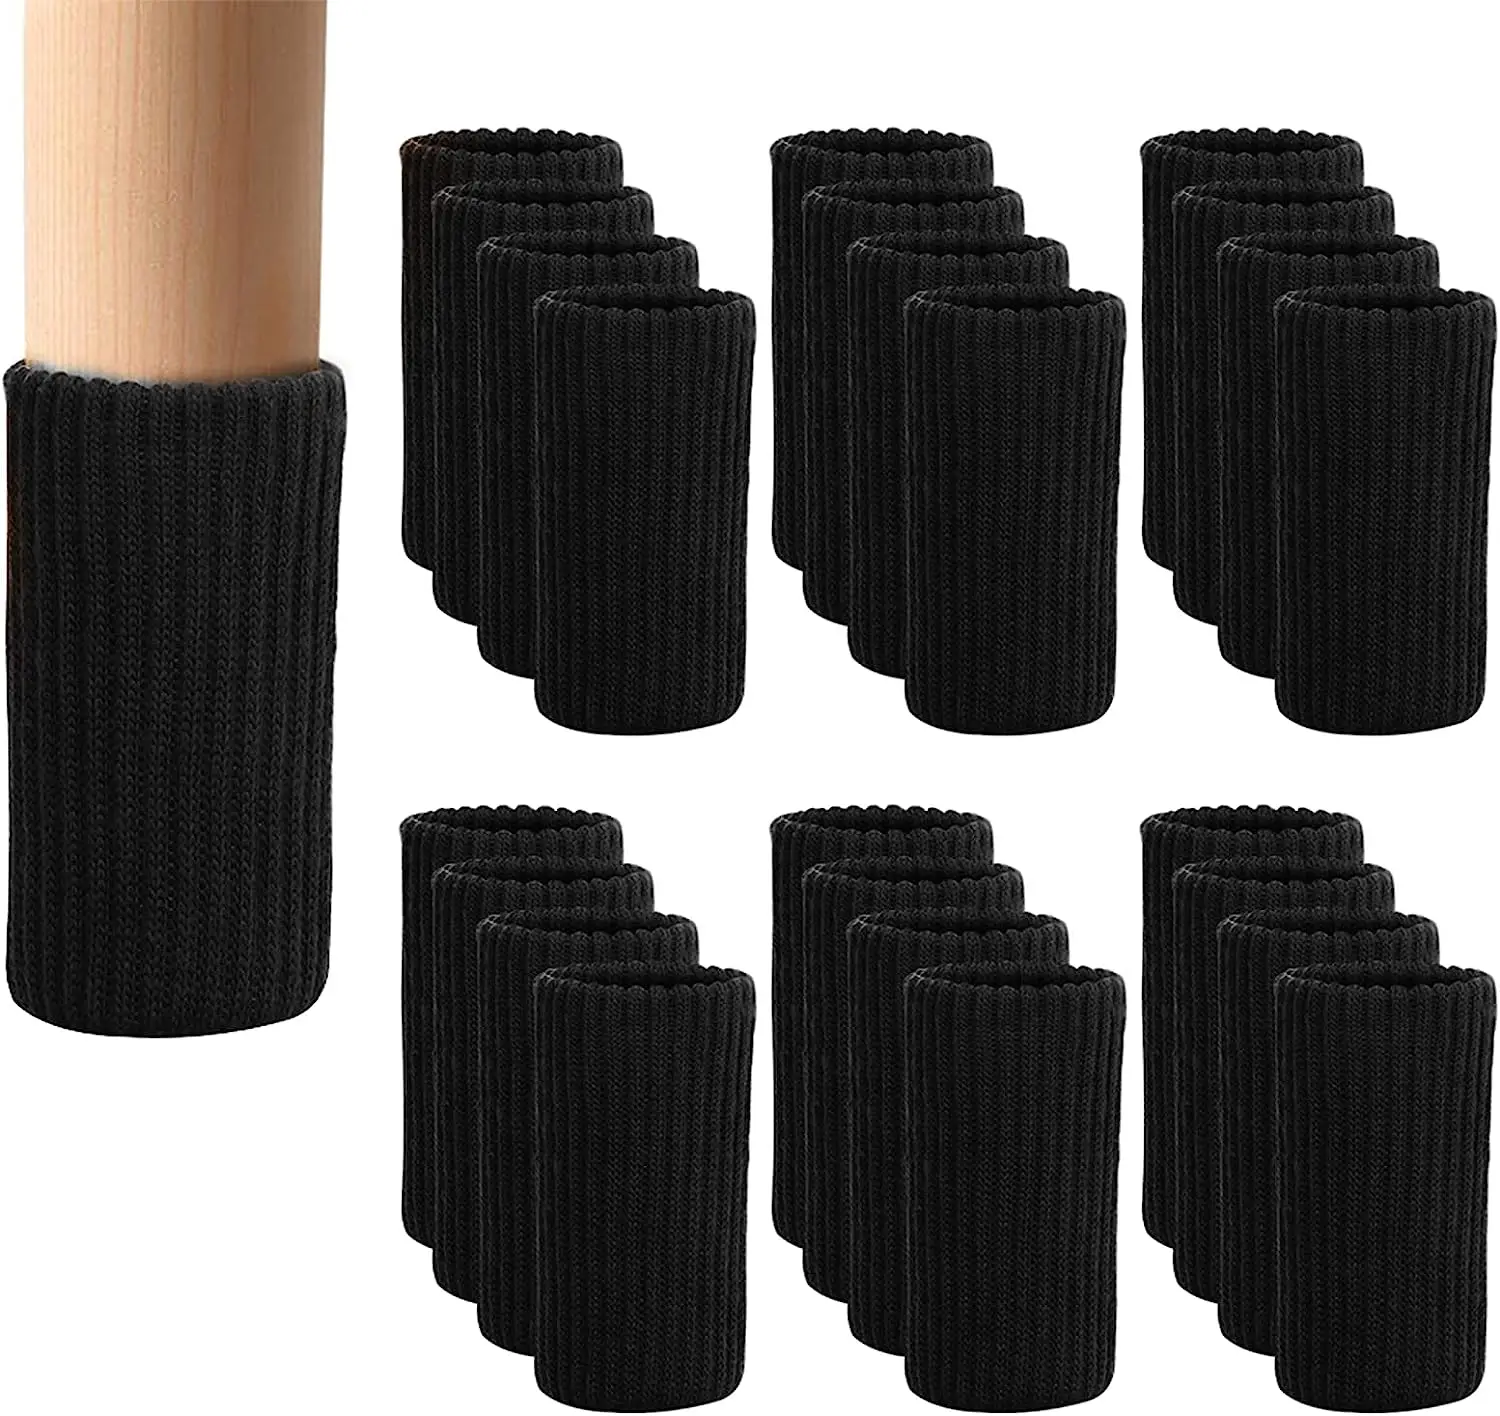 24 Pcs Black Premium Chair Leg Socks Protectors Fits Most Leg Shapes High Elastic Bar Stool Leg Covers